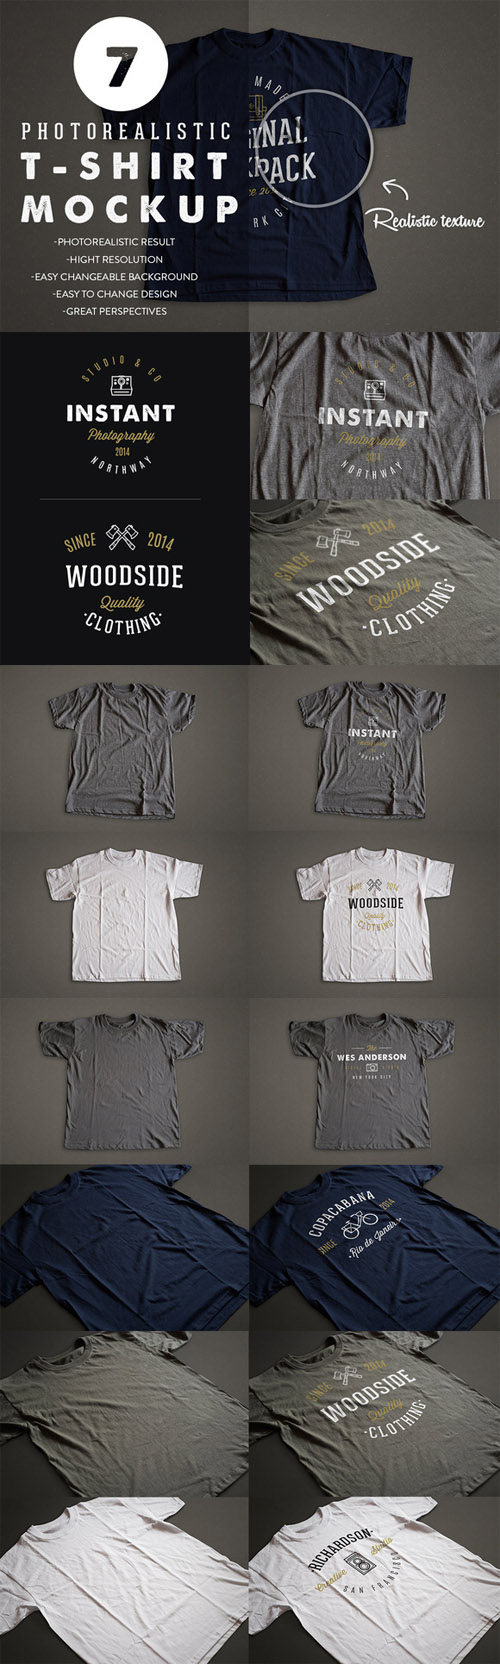 CreativeMarket - Photorealistic T-Shirt Mockup 2 68645